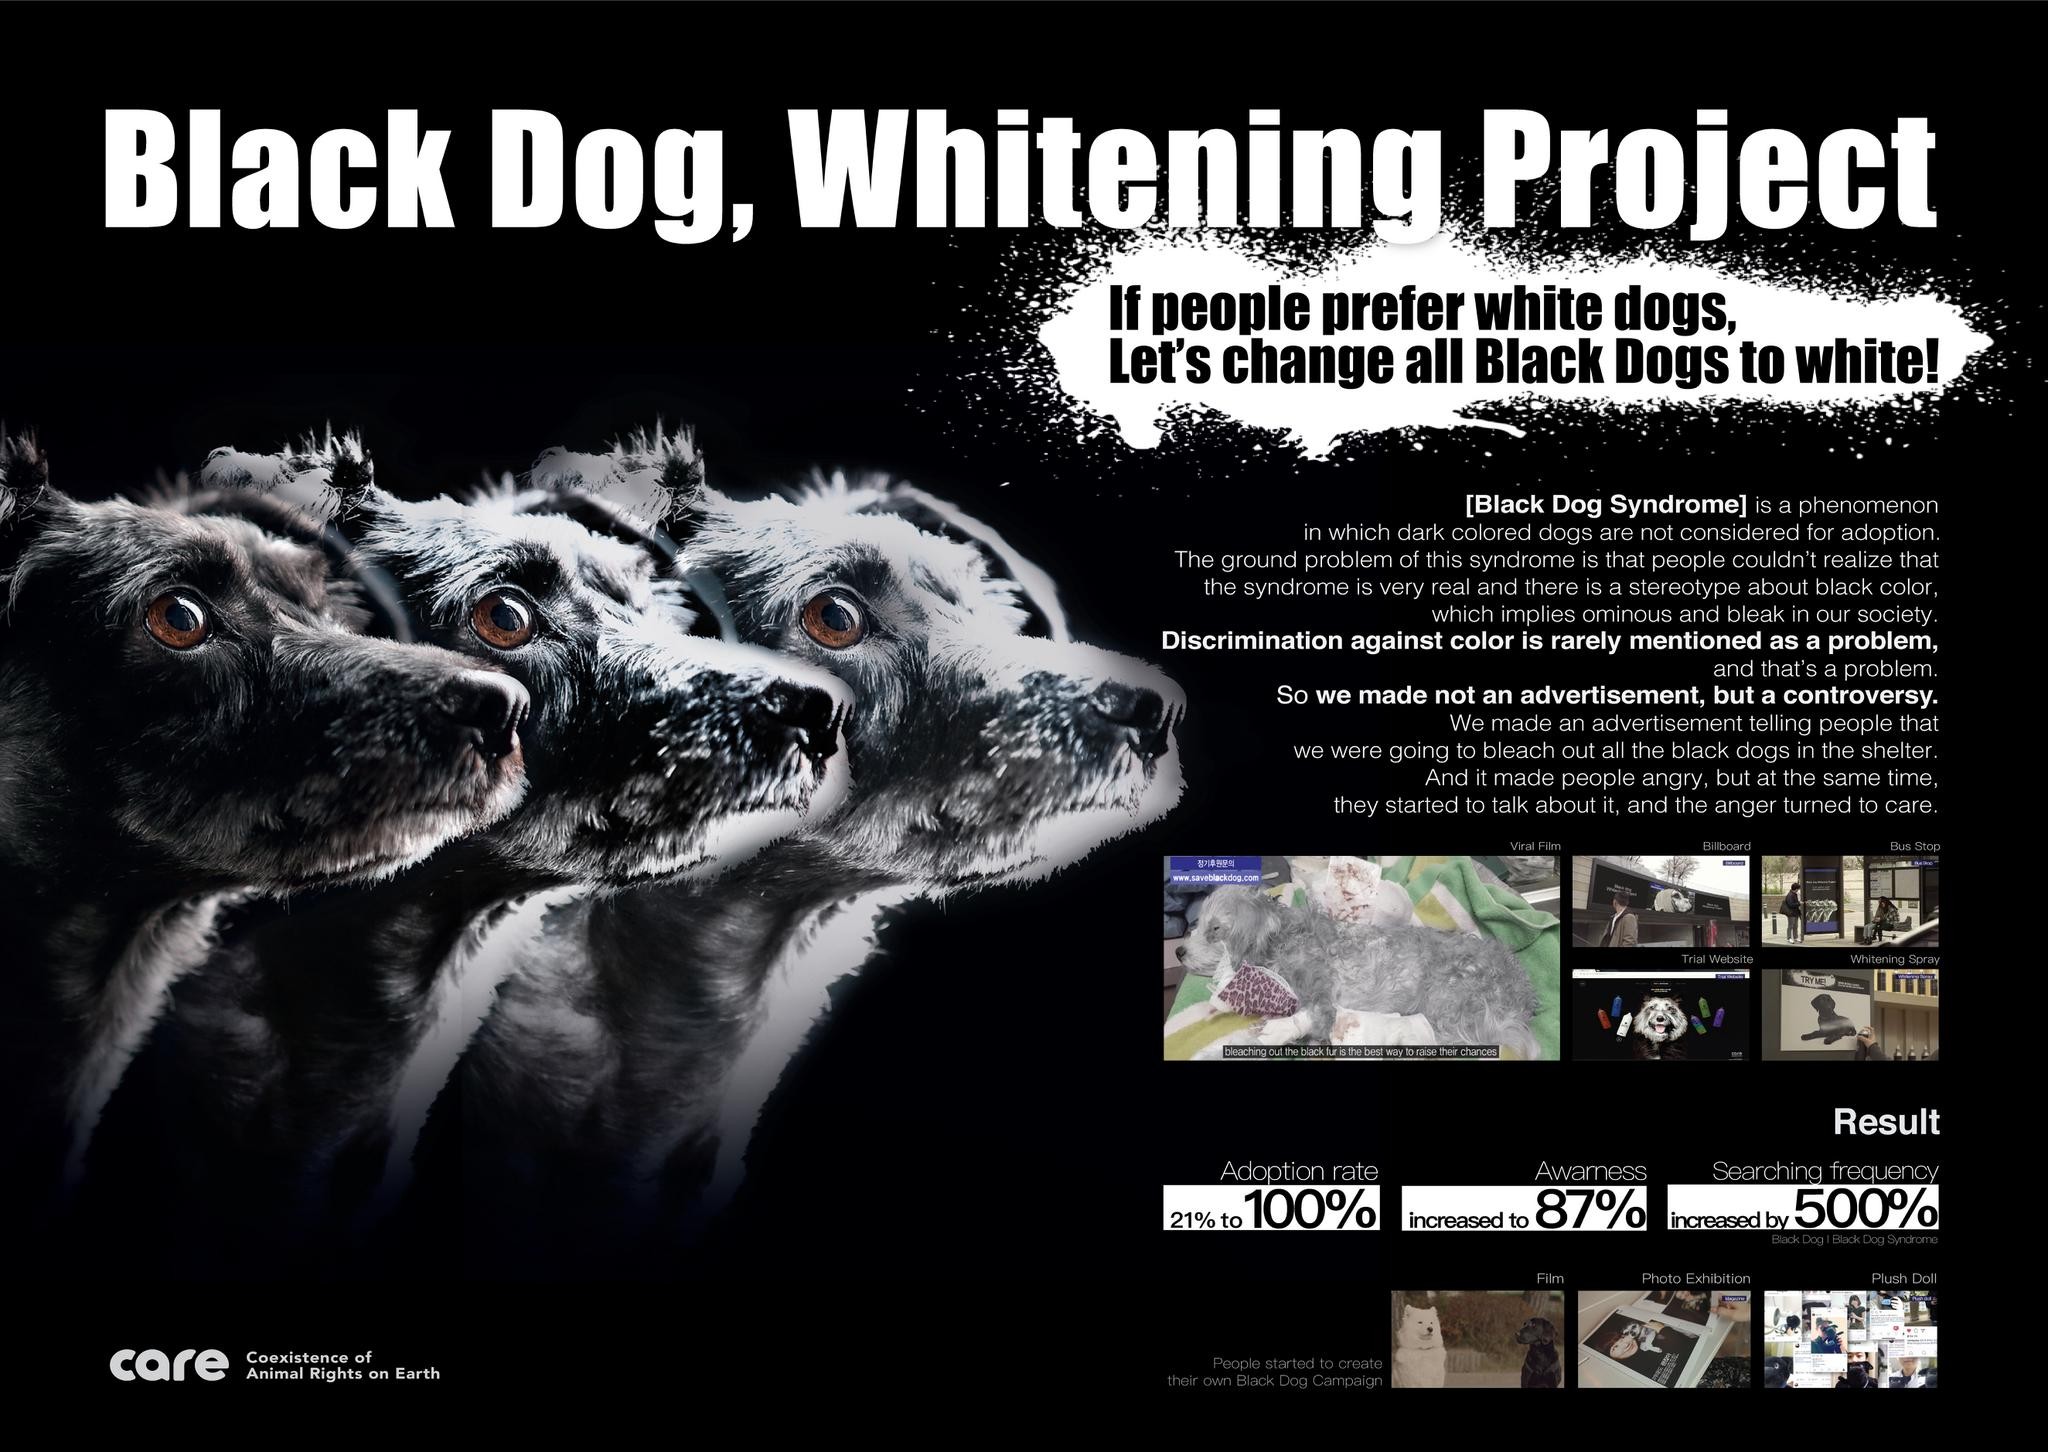 Black dog whitening project